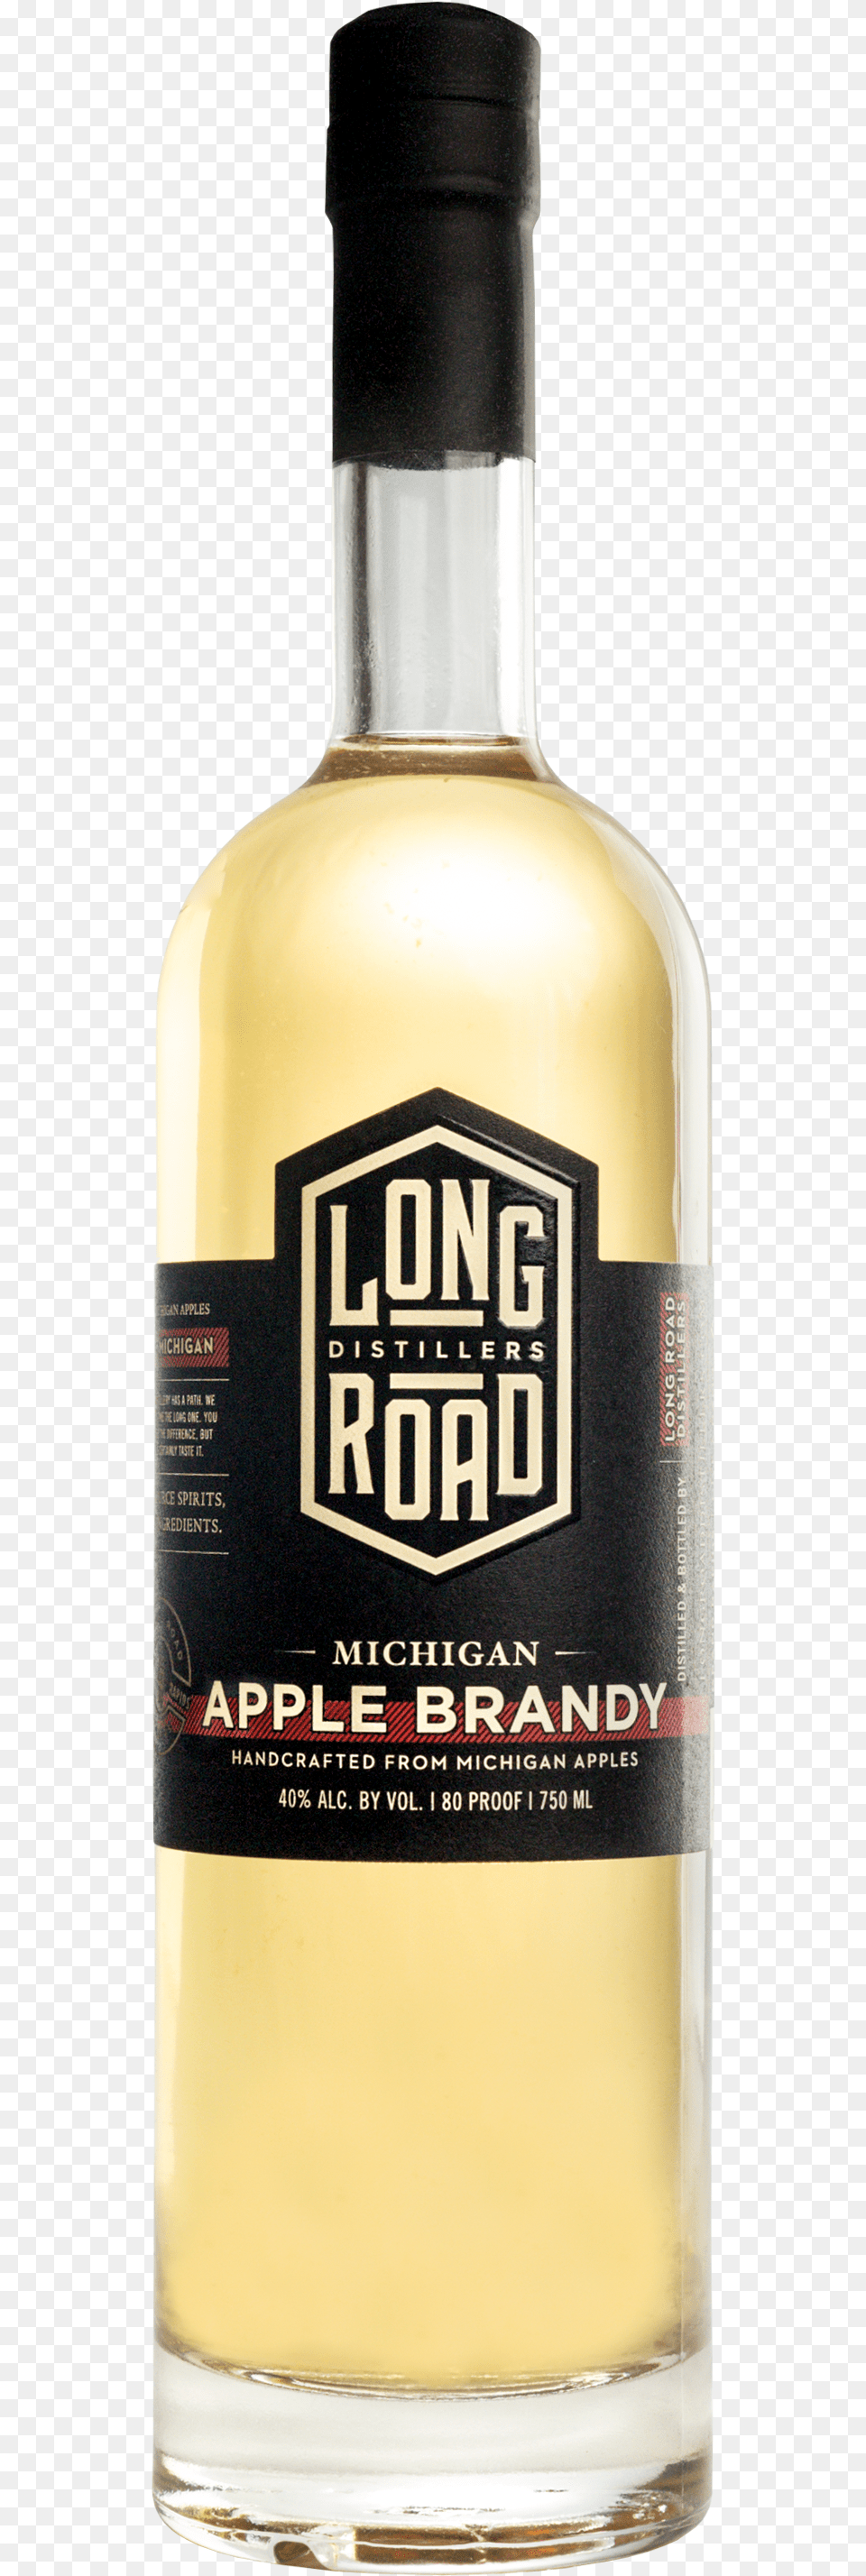 Michigan Apply Brandy Long Road Distillers Glass Bottle, Alcohol, Beverage, Liquor, Beer Png Image